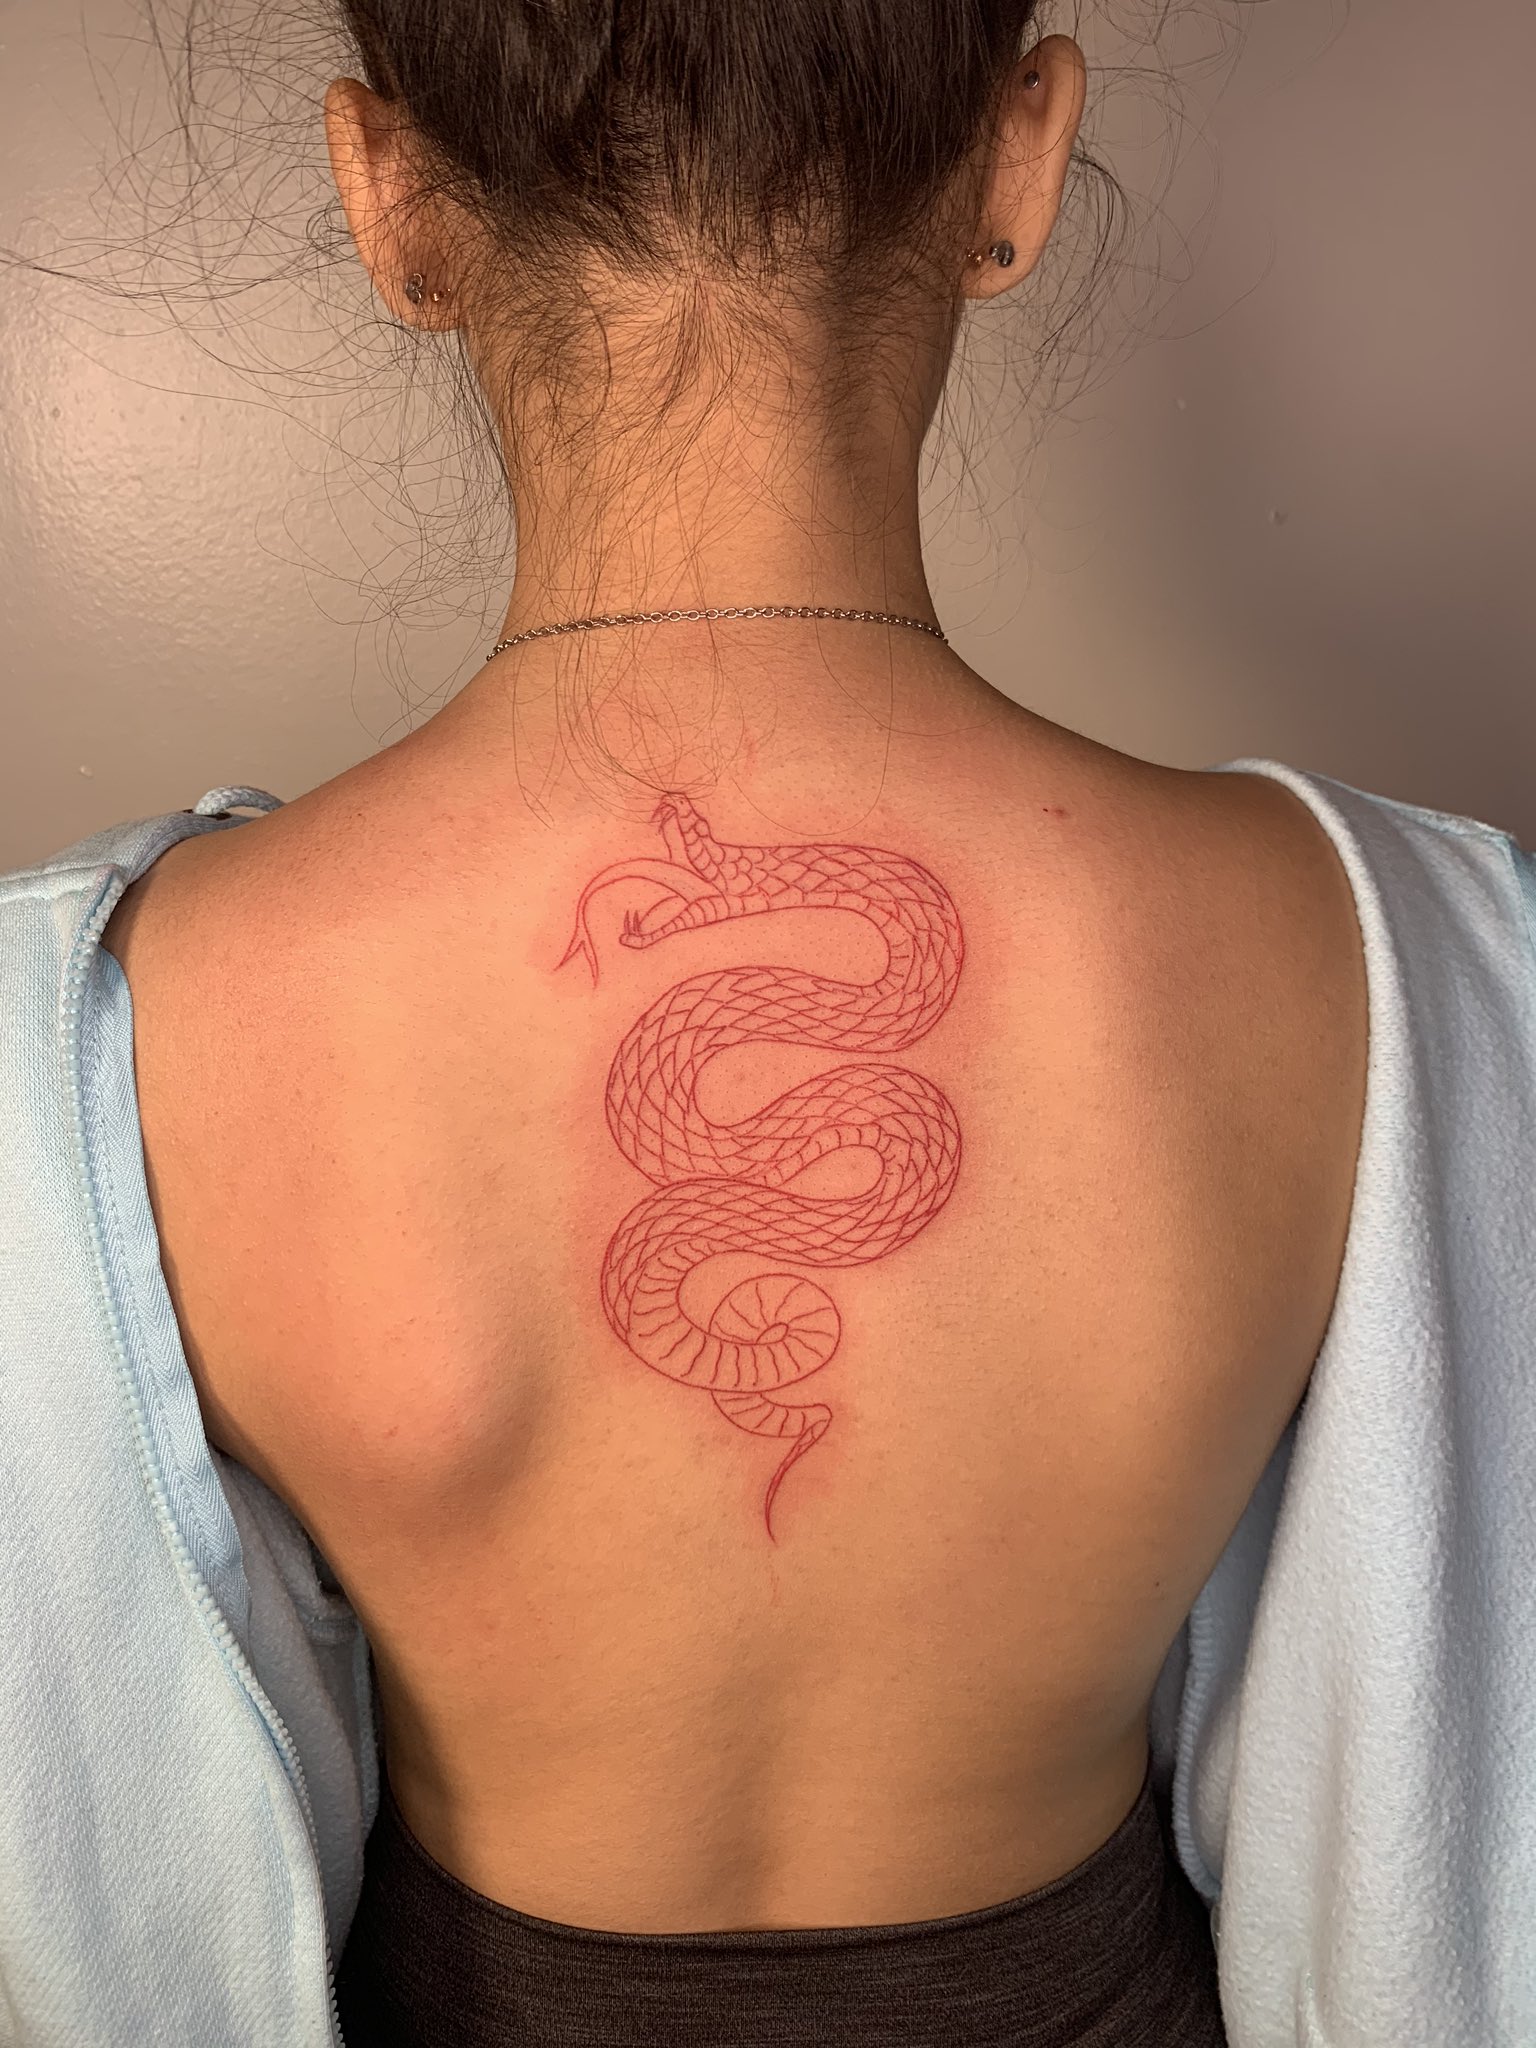 Fine line snake tattoo on the upper back.